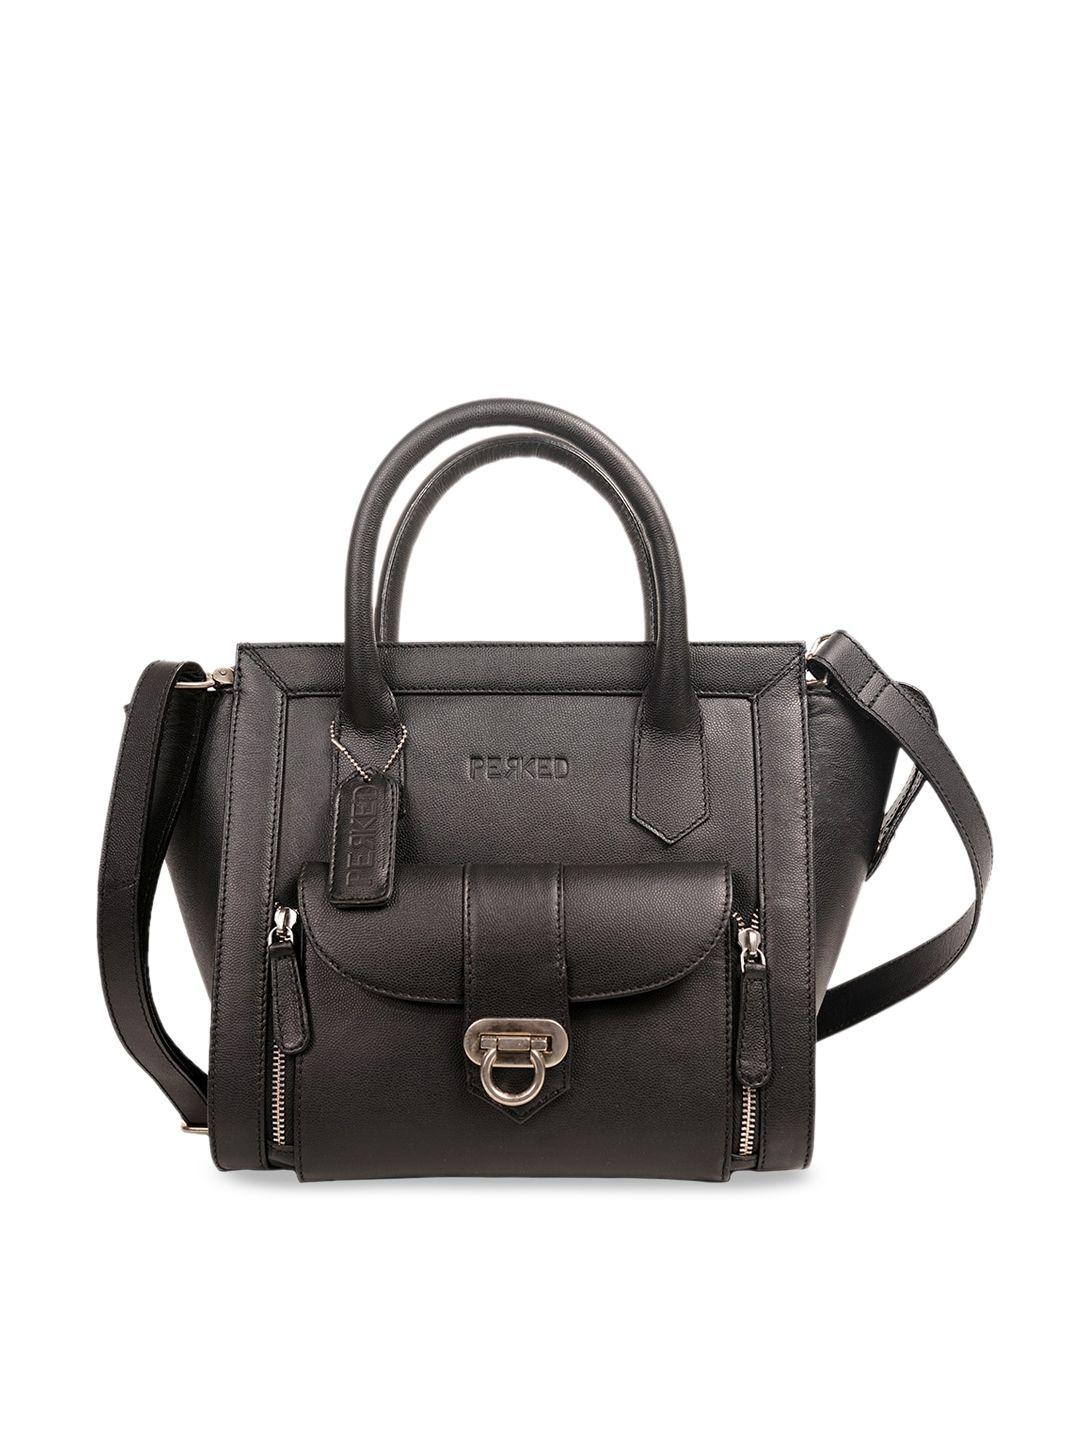 perked black leather swagger handheld bag